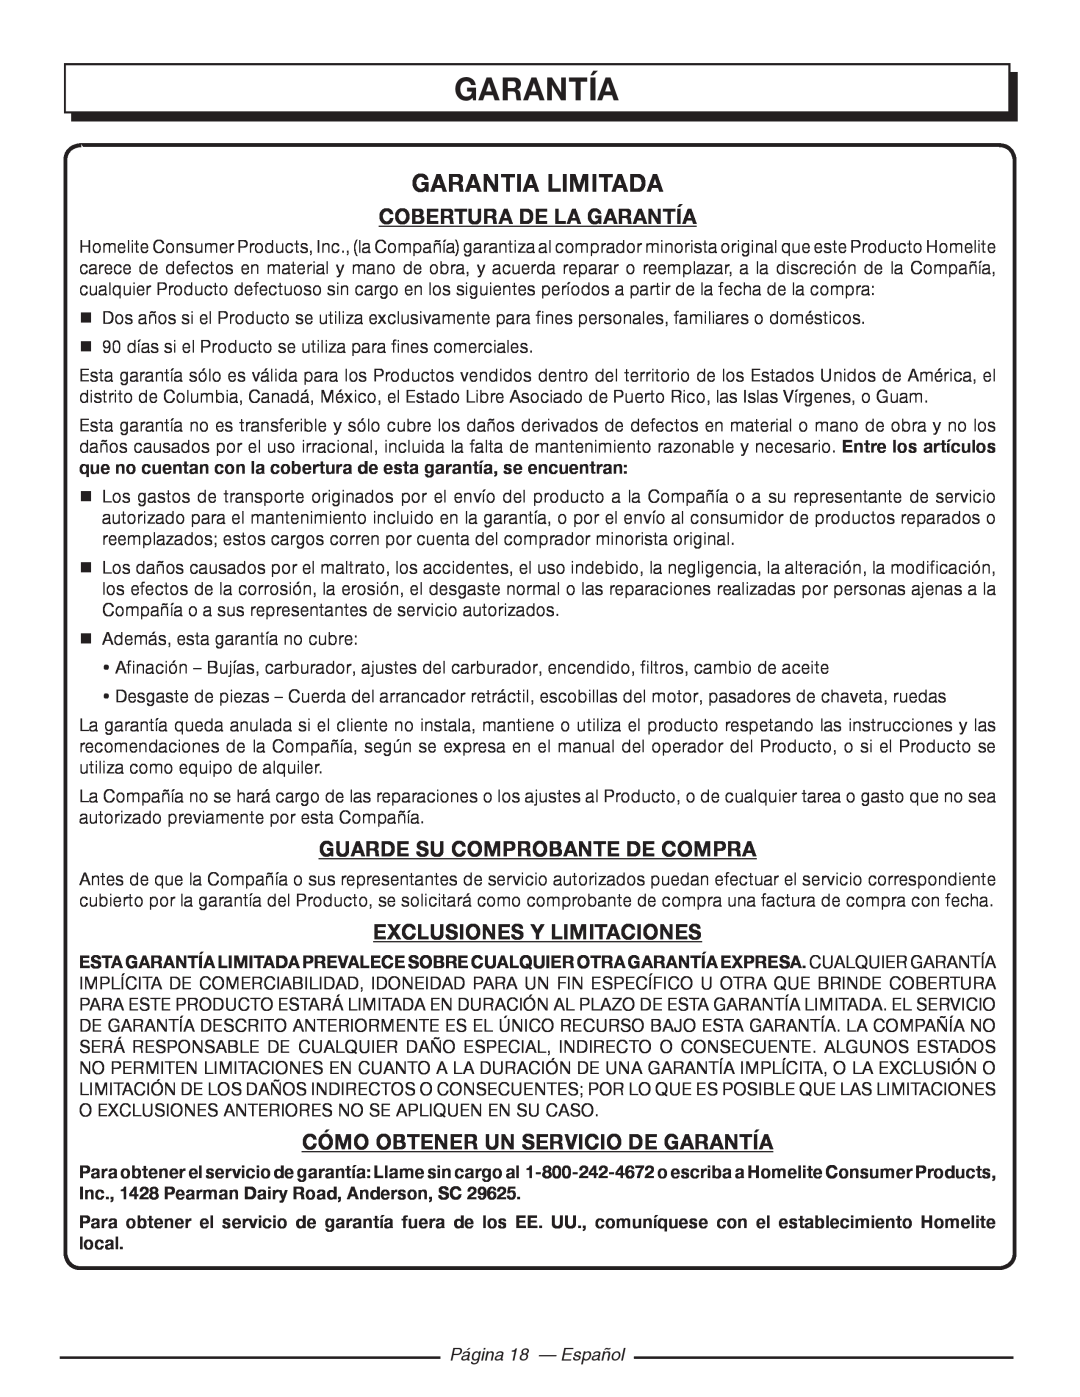 Homelite HG5000 manuel dutilisation Garantía, Garantia Limitada, Página 18 — Español 